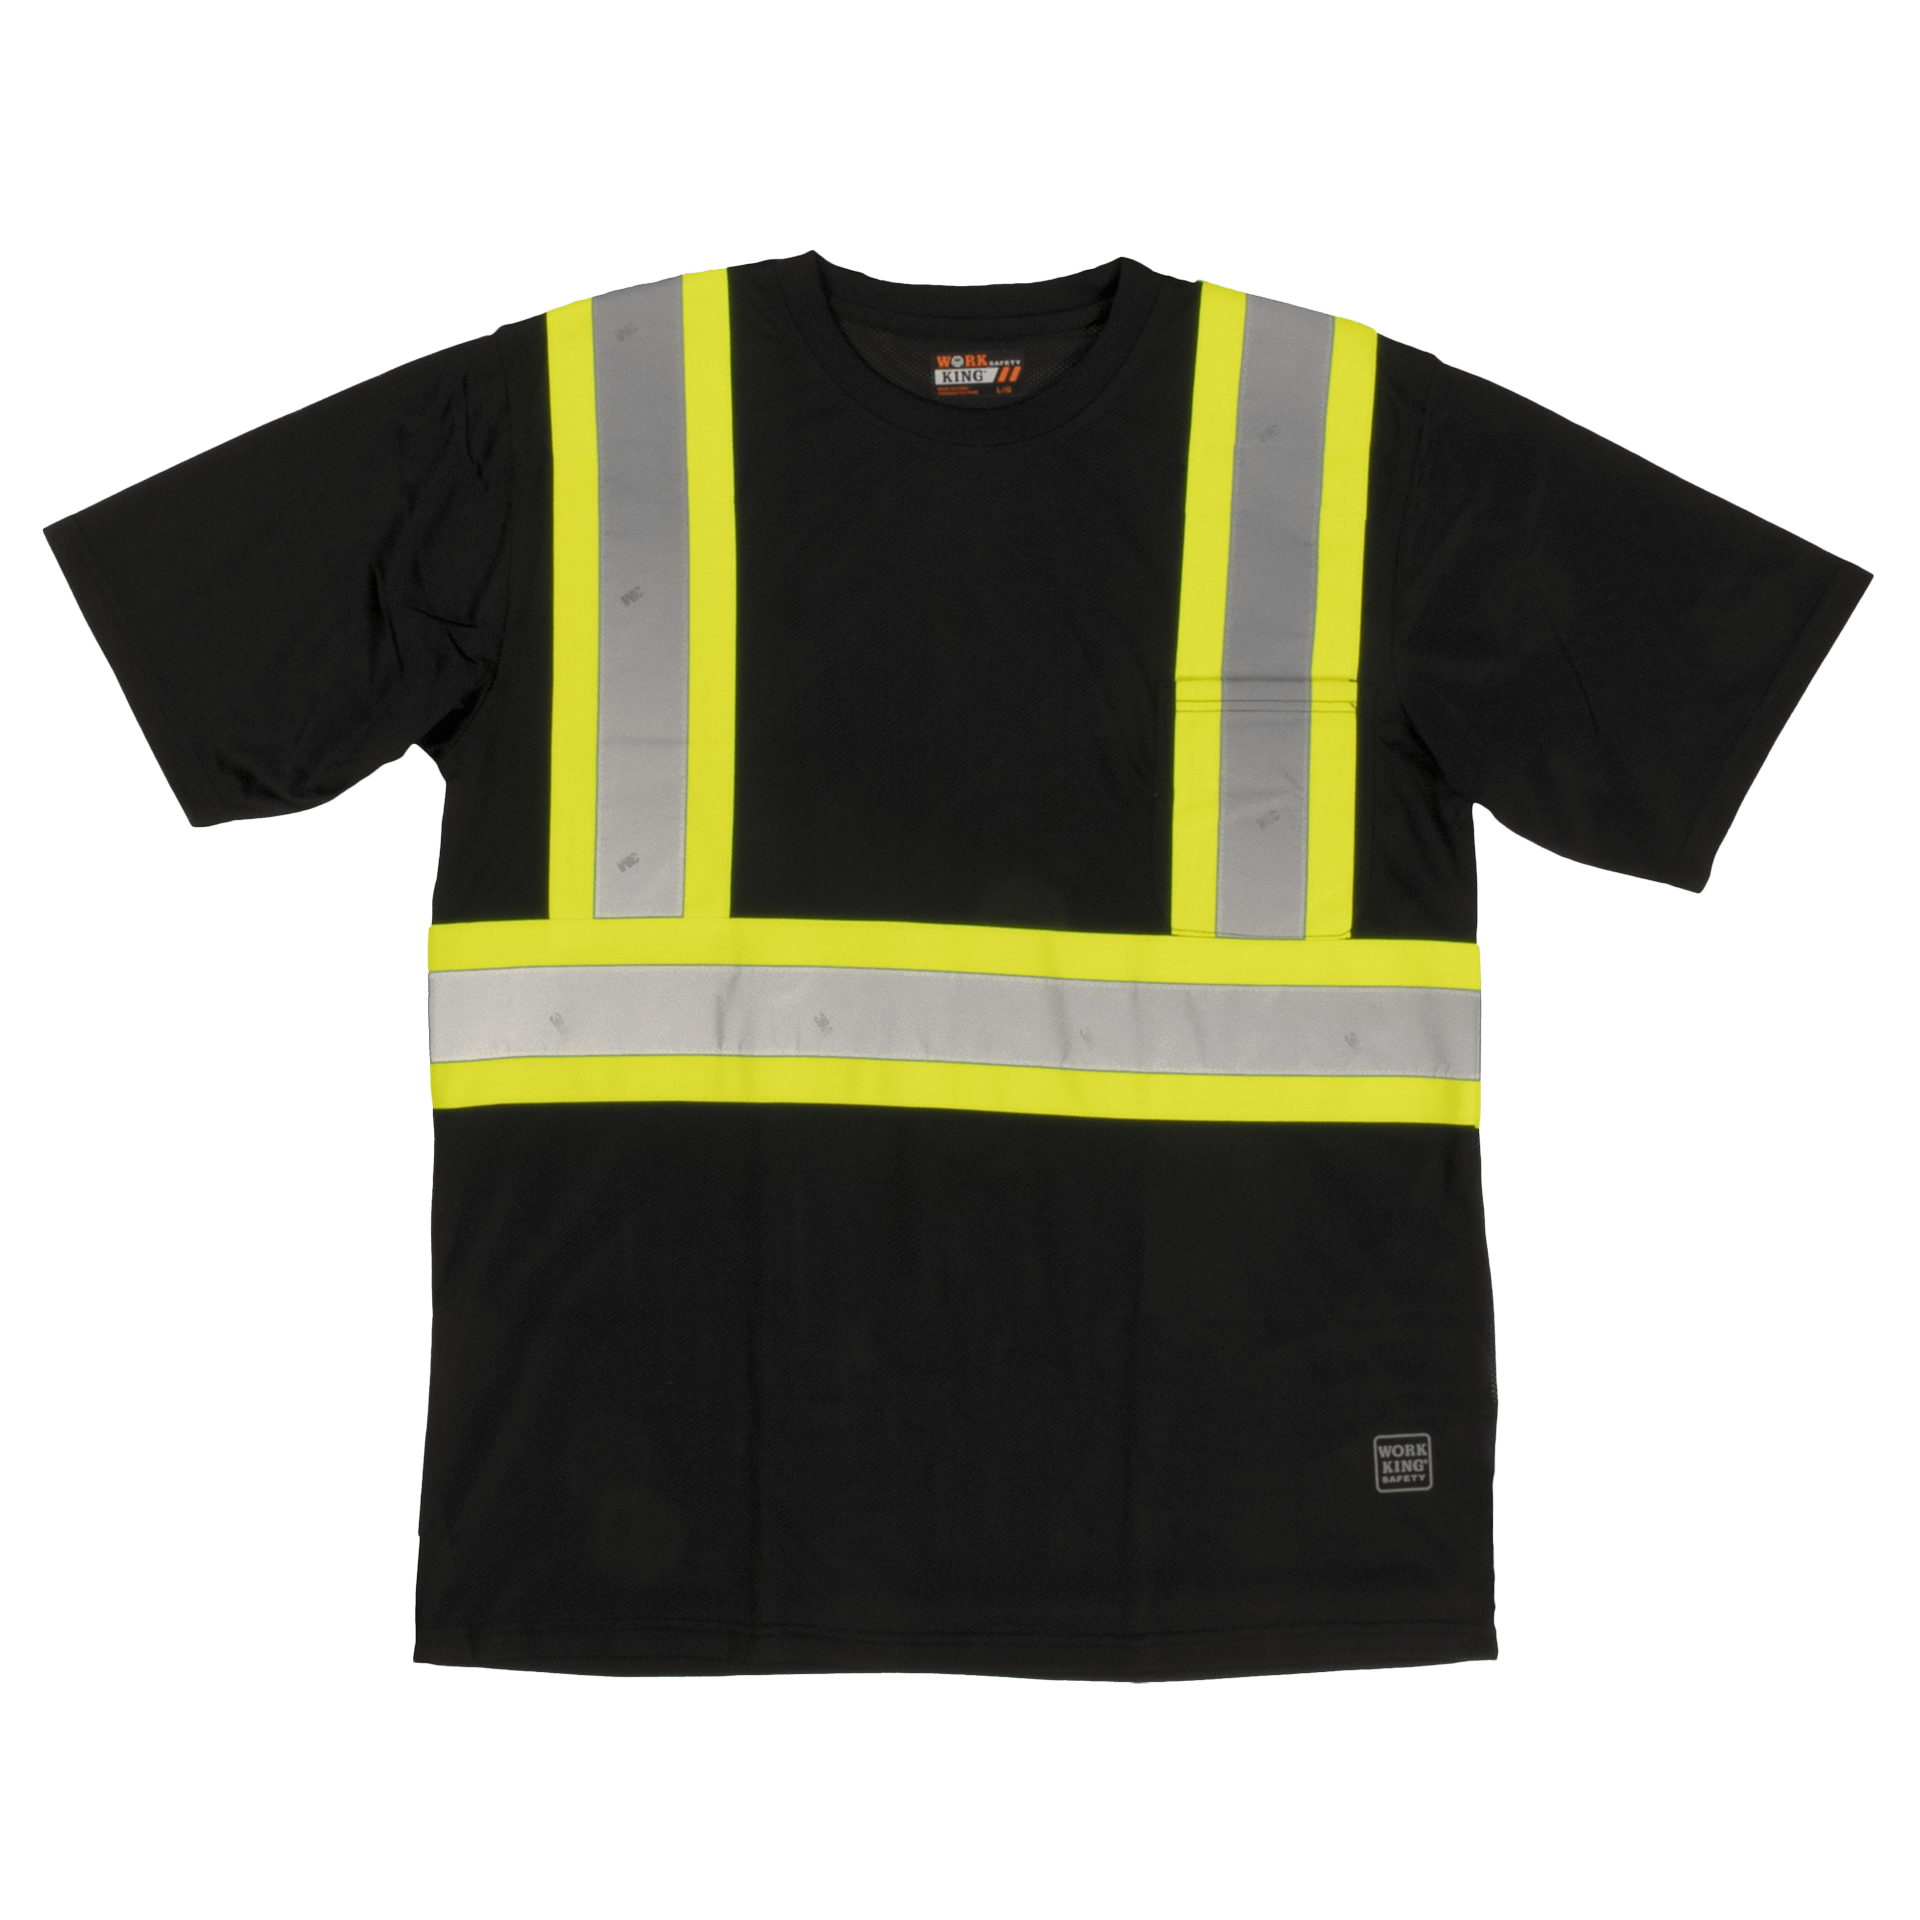 Tough Duck Short Sleeve Safety T-Shirt - S392 - Black